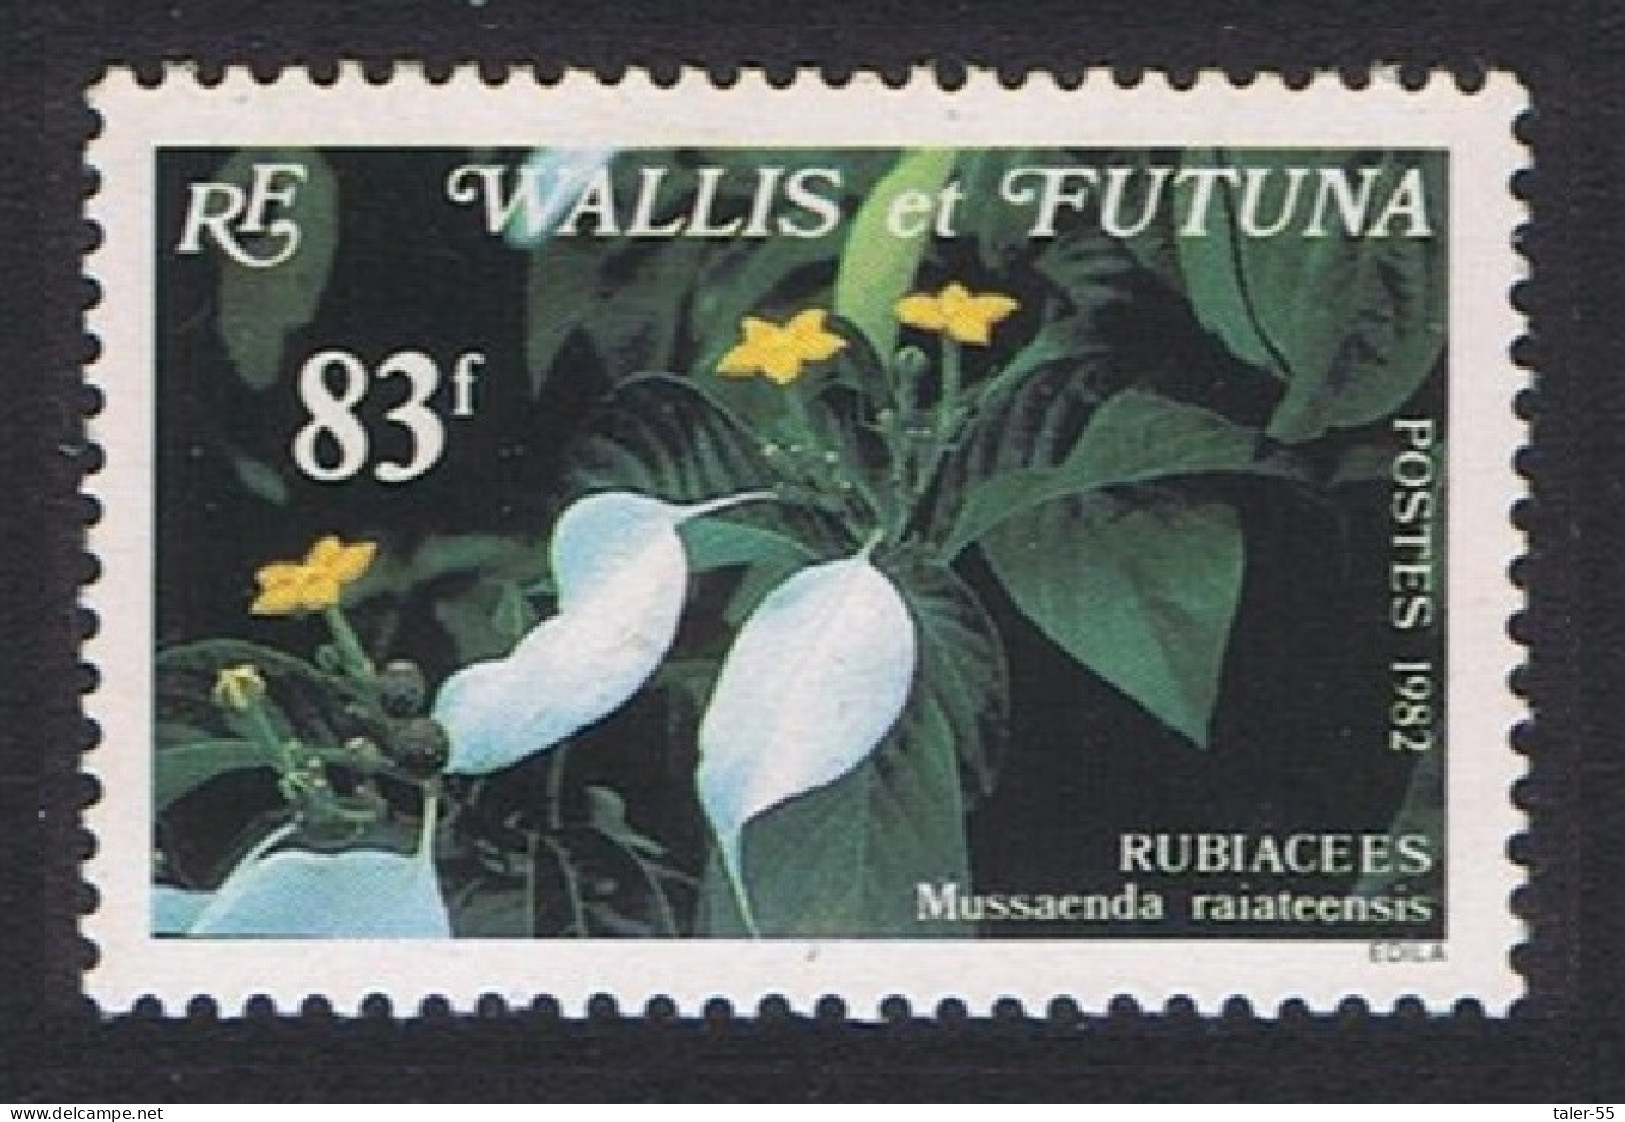 Wallis And Futuna Orchids Mussaenda Raiateensis 83f 1982 MNH SG#399 Sc#286 - Nuevos